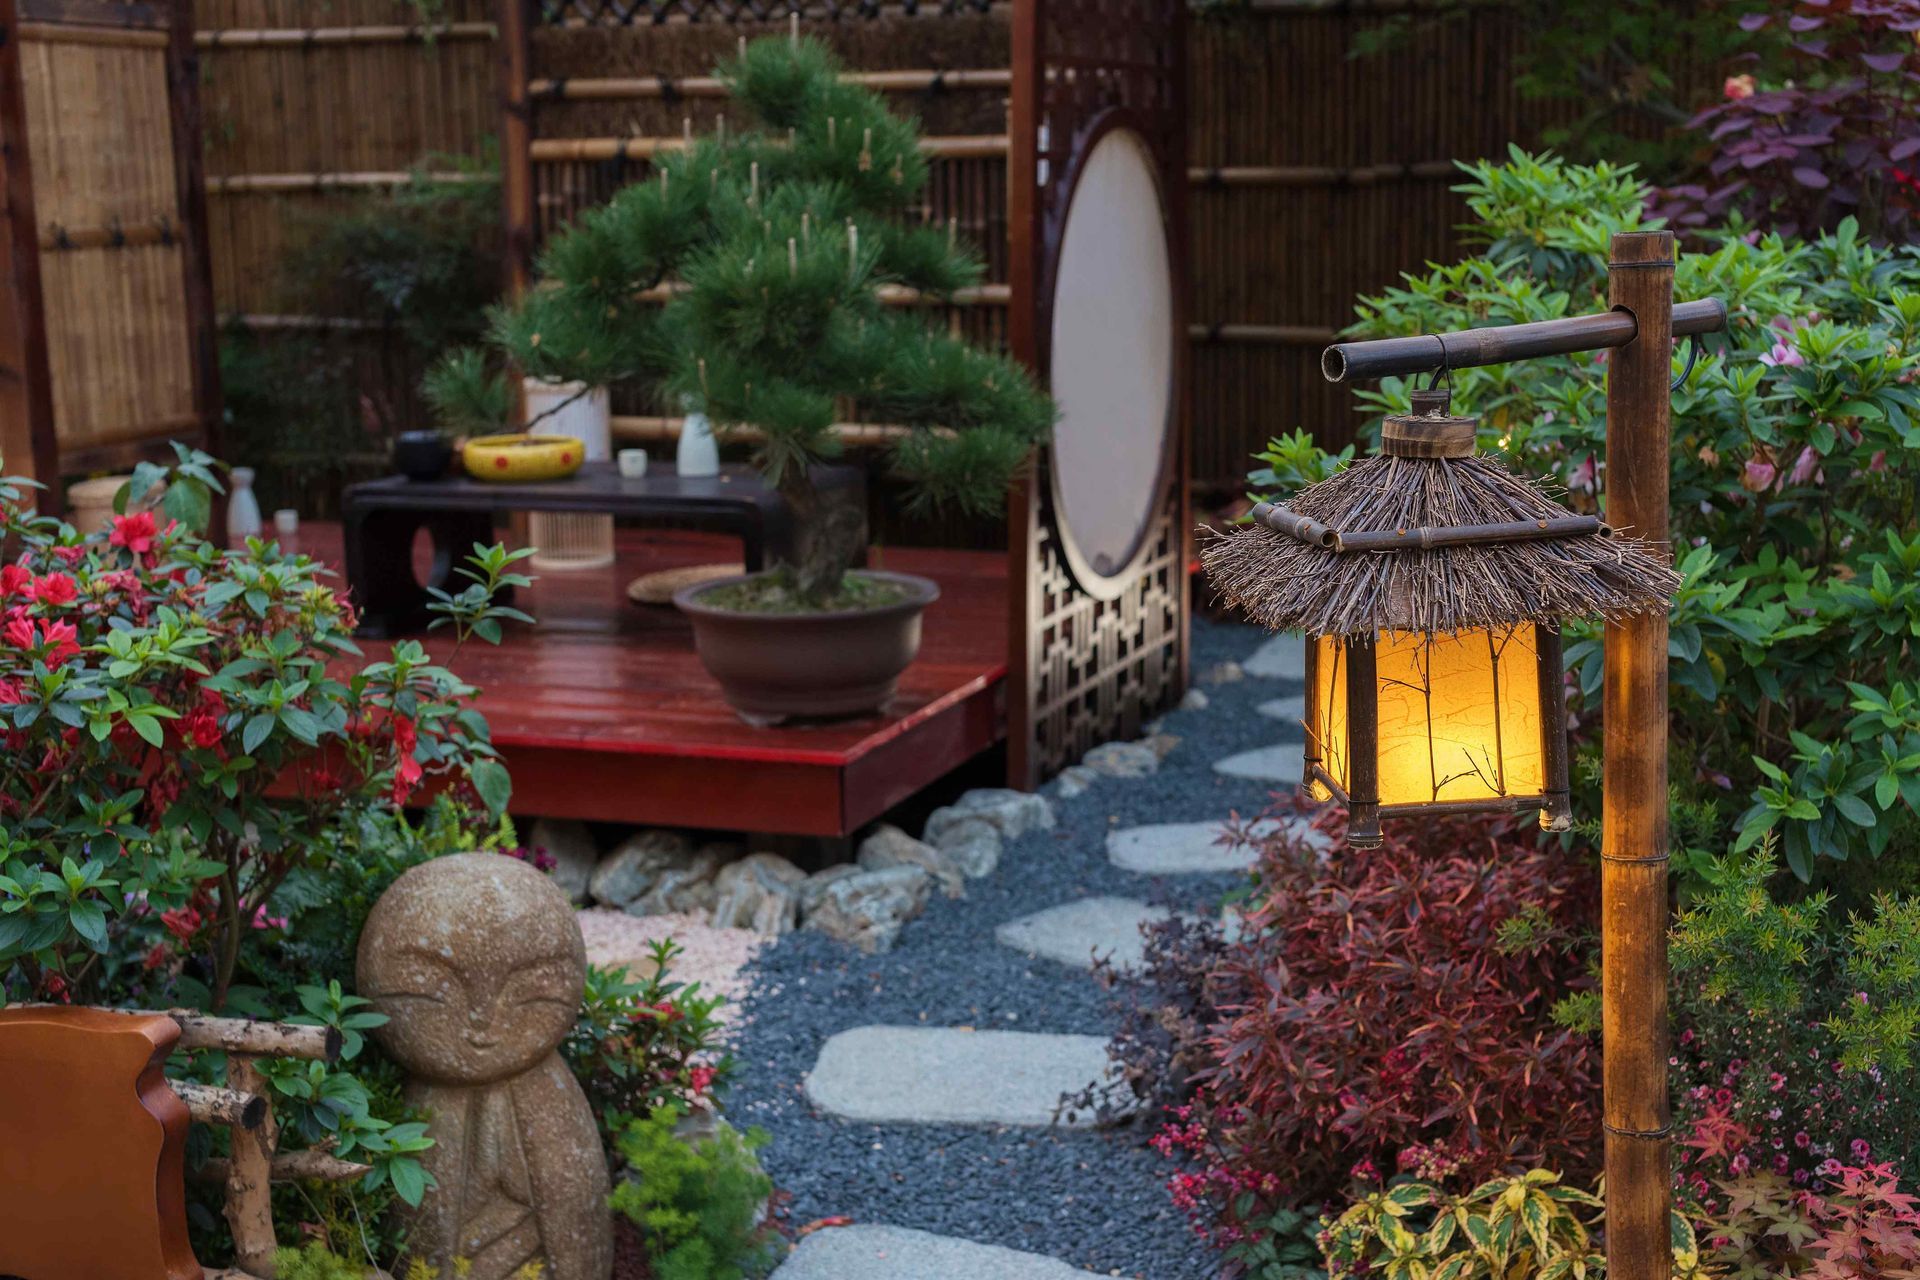 A zen-inspired garden oasis illuminated by a lantern.